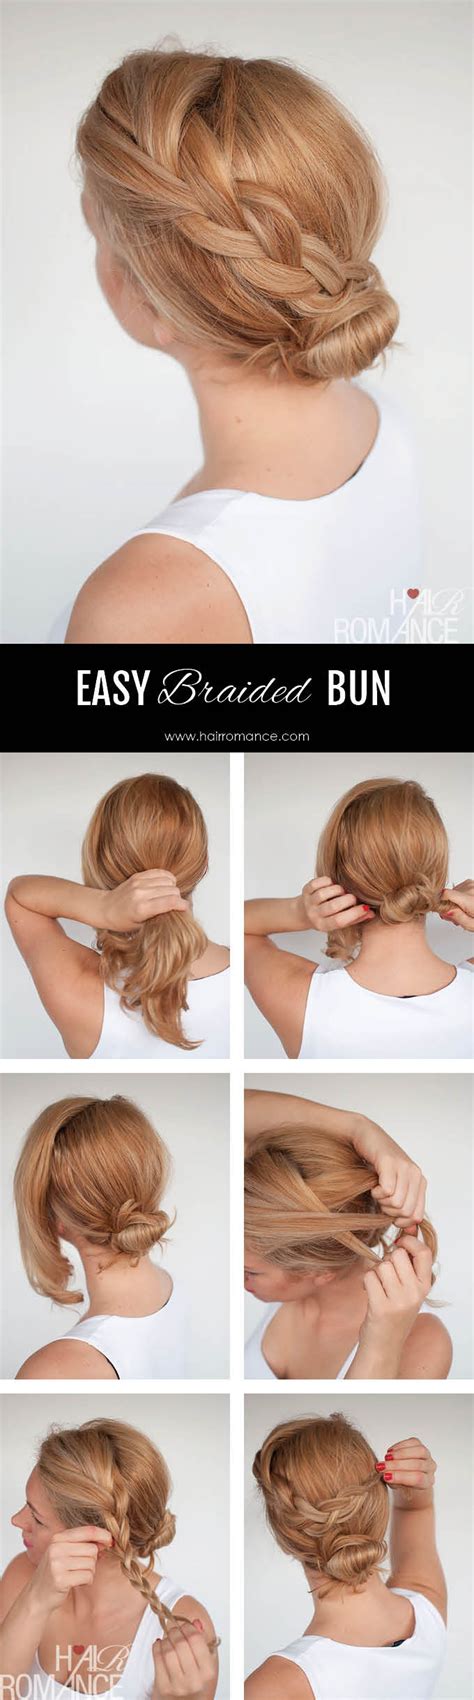 Upskill Your Work Bun With This Simple Braid Tutorial